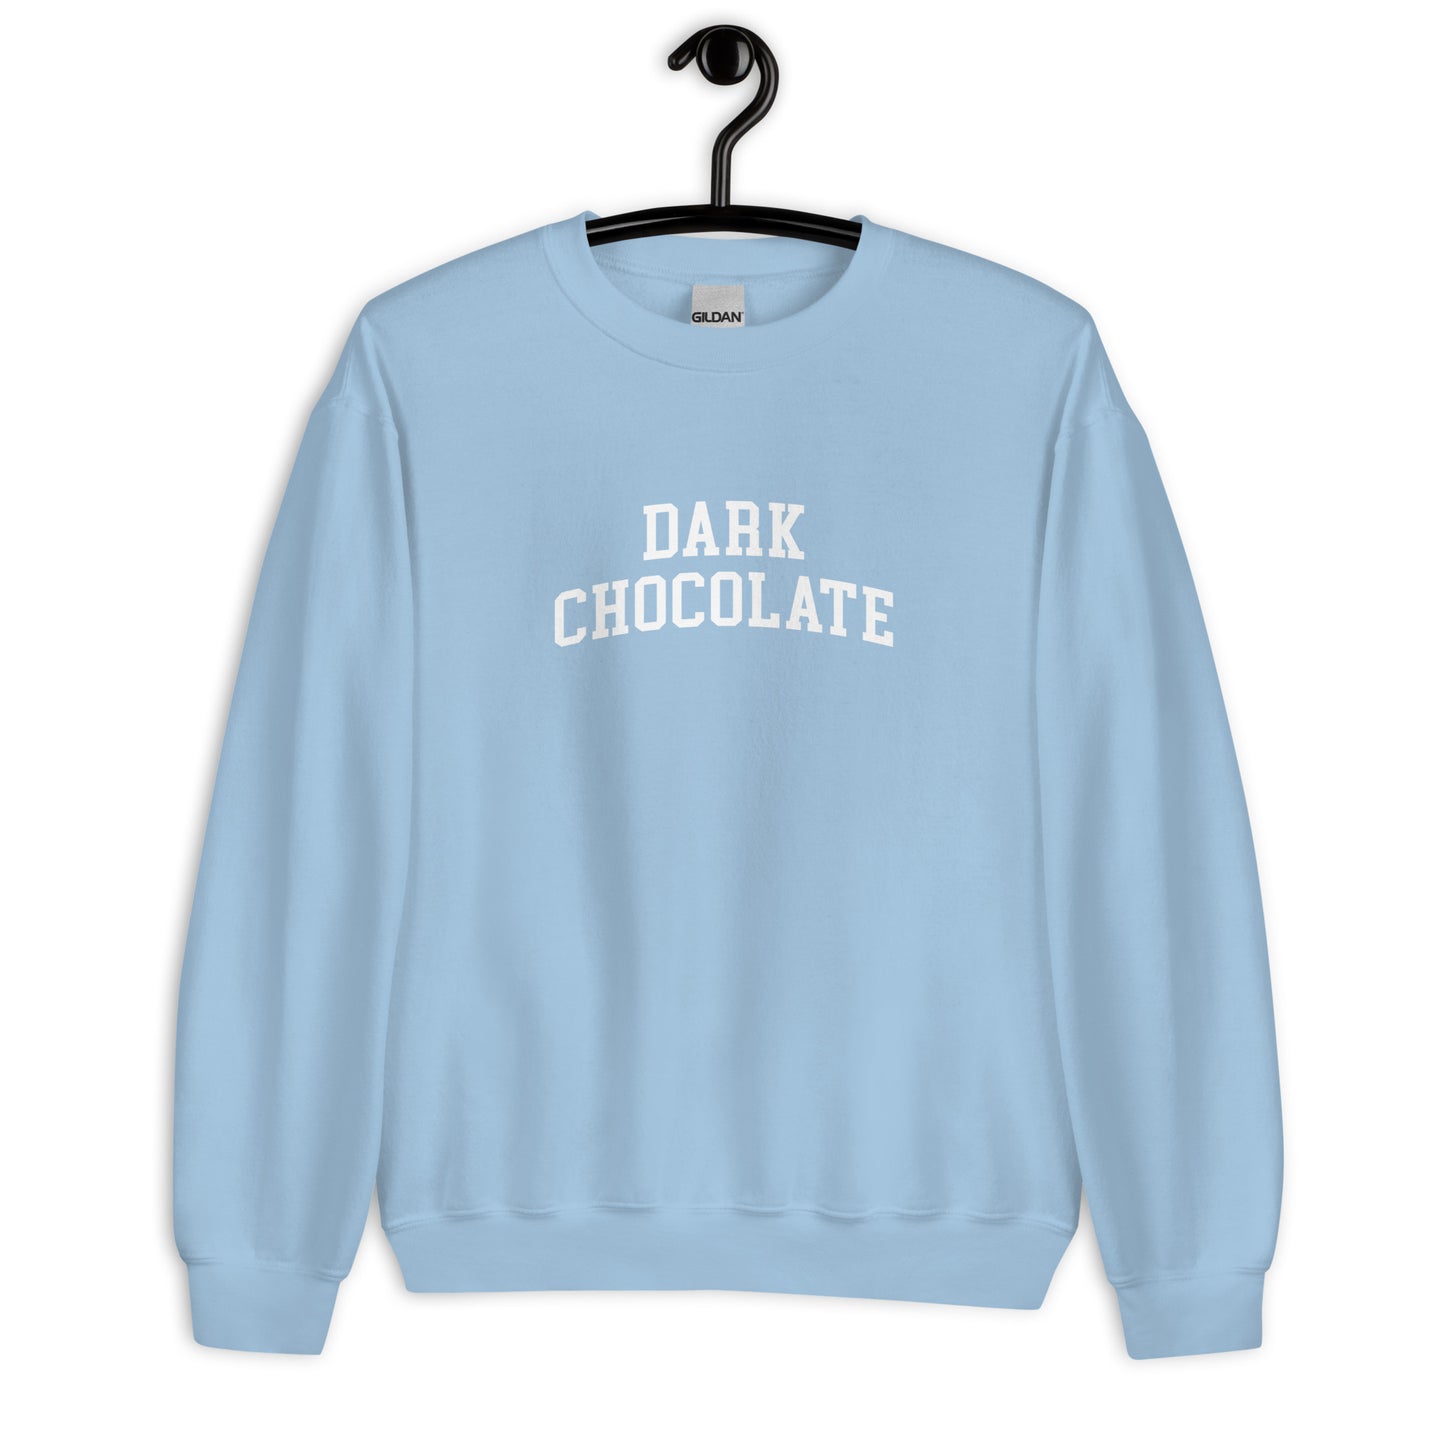 Dark Chocolate Sweatshirt - Arched Font